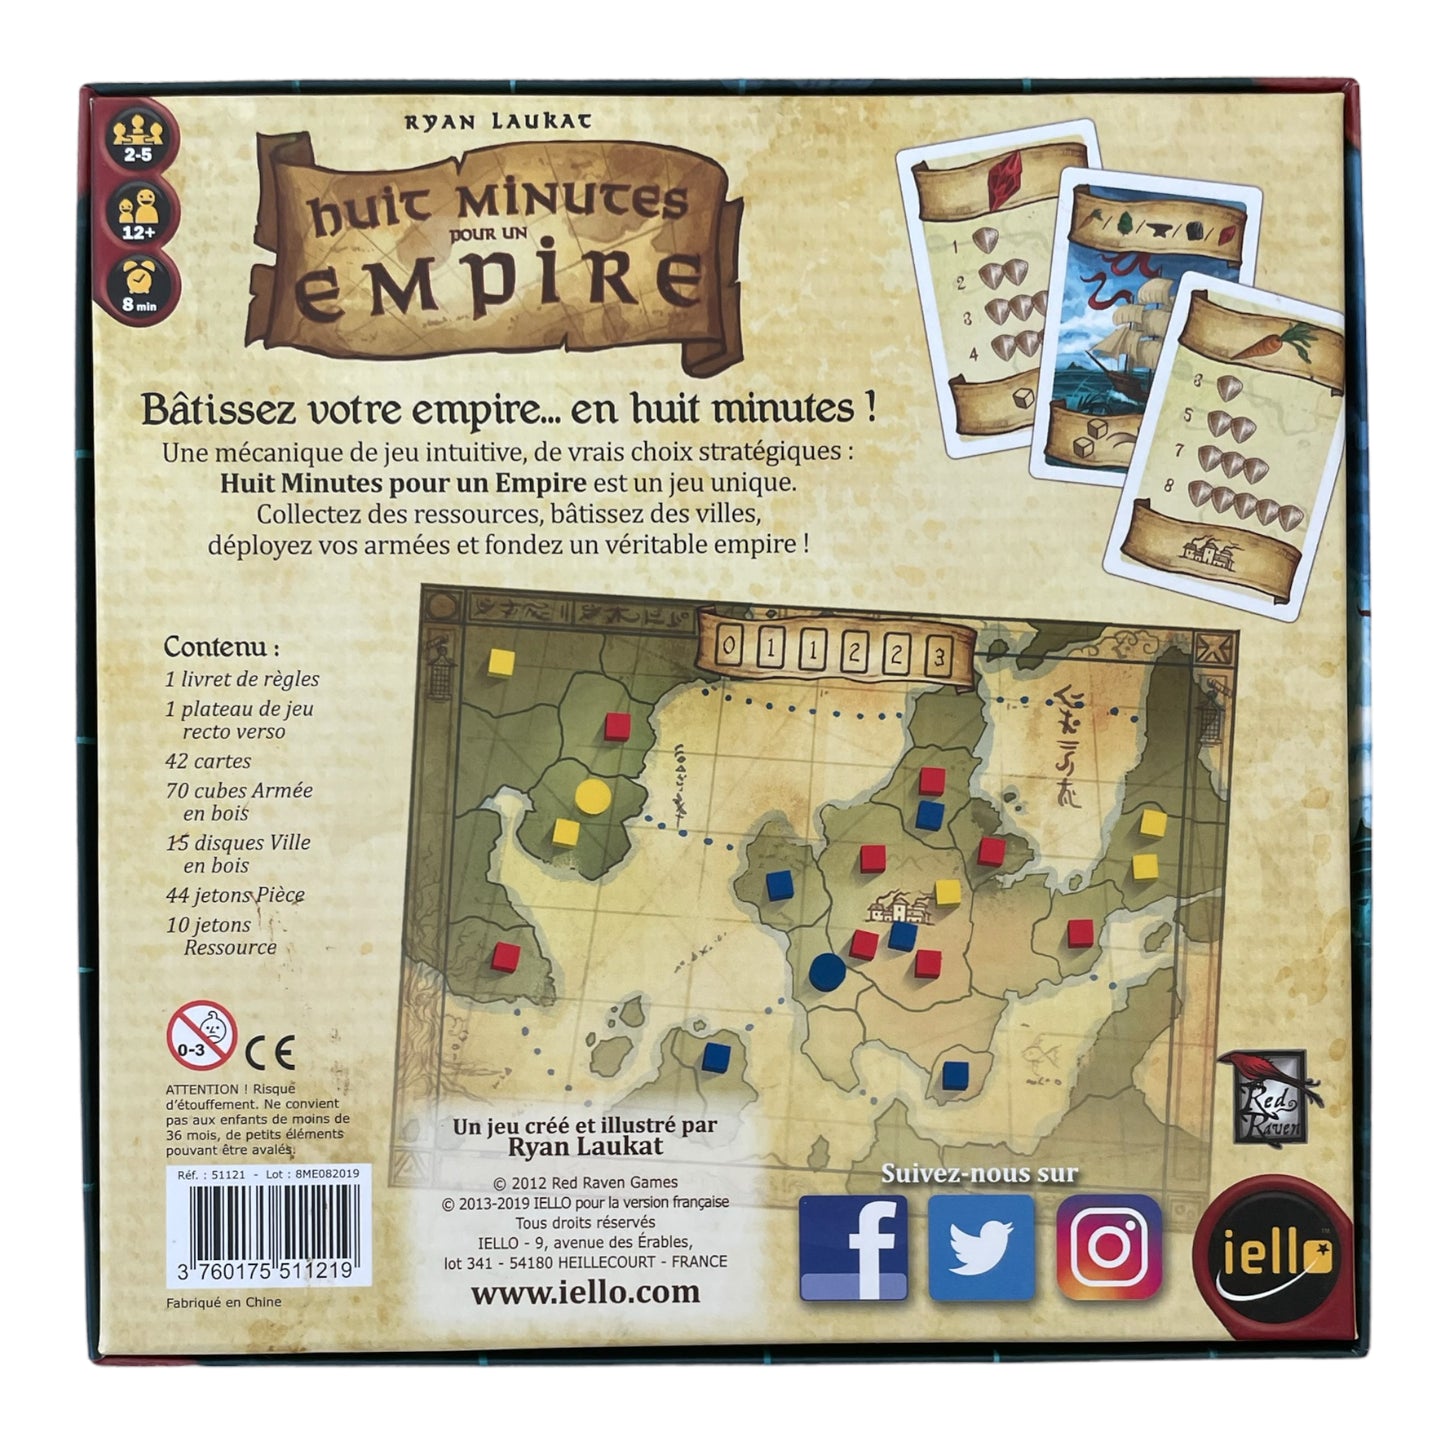 Huit minutes pour un empire - Board Game - French version